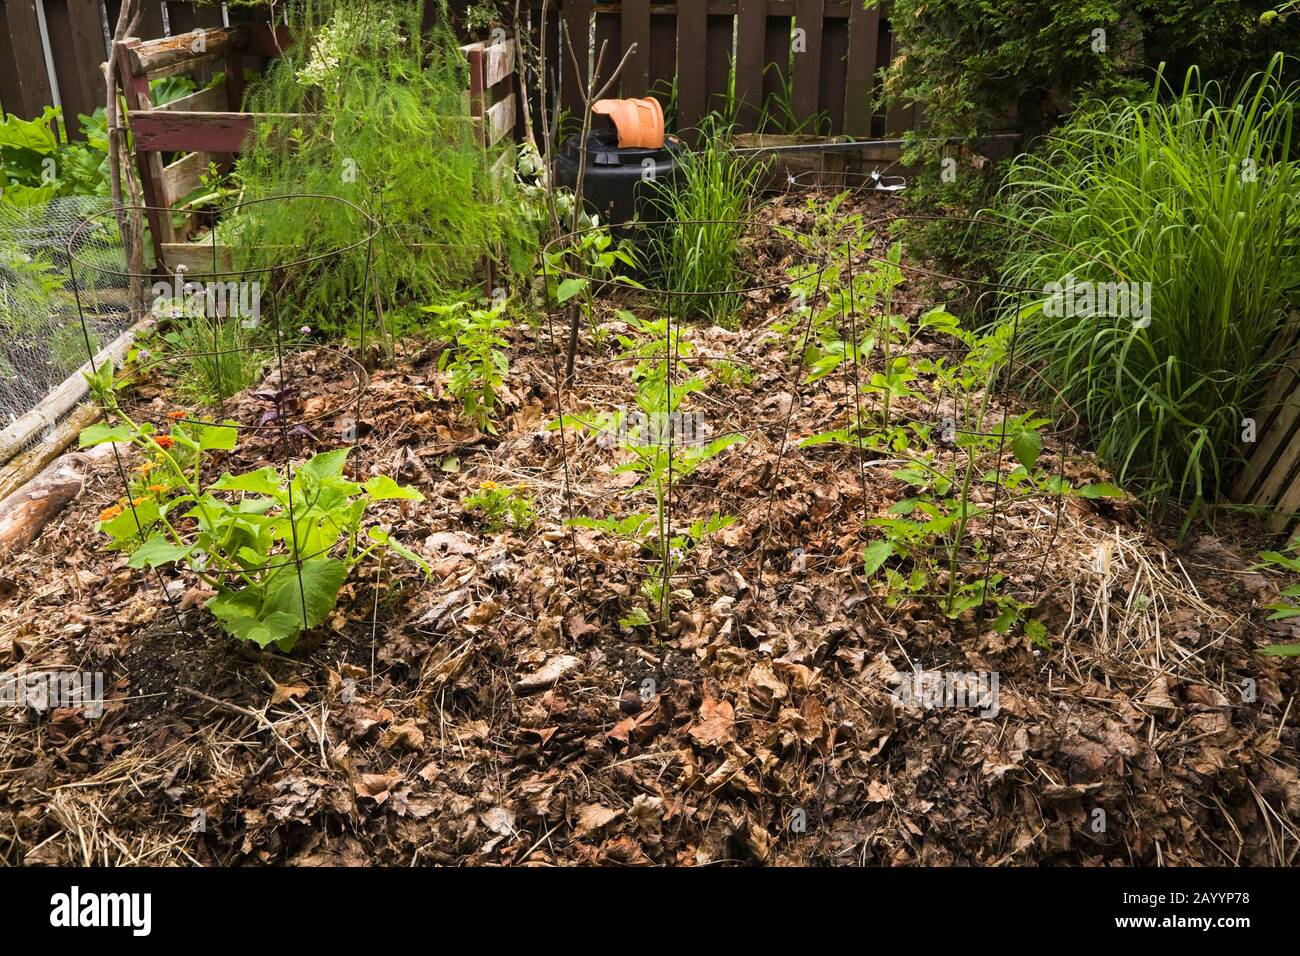 Tomatoe plants growing in dead leaf mulch border in backyard organic garden in late spring Stock Photo